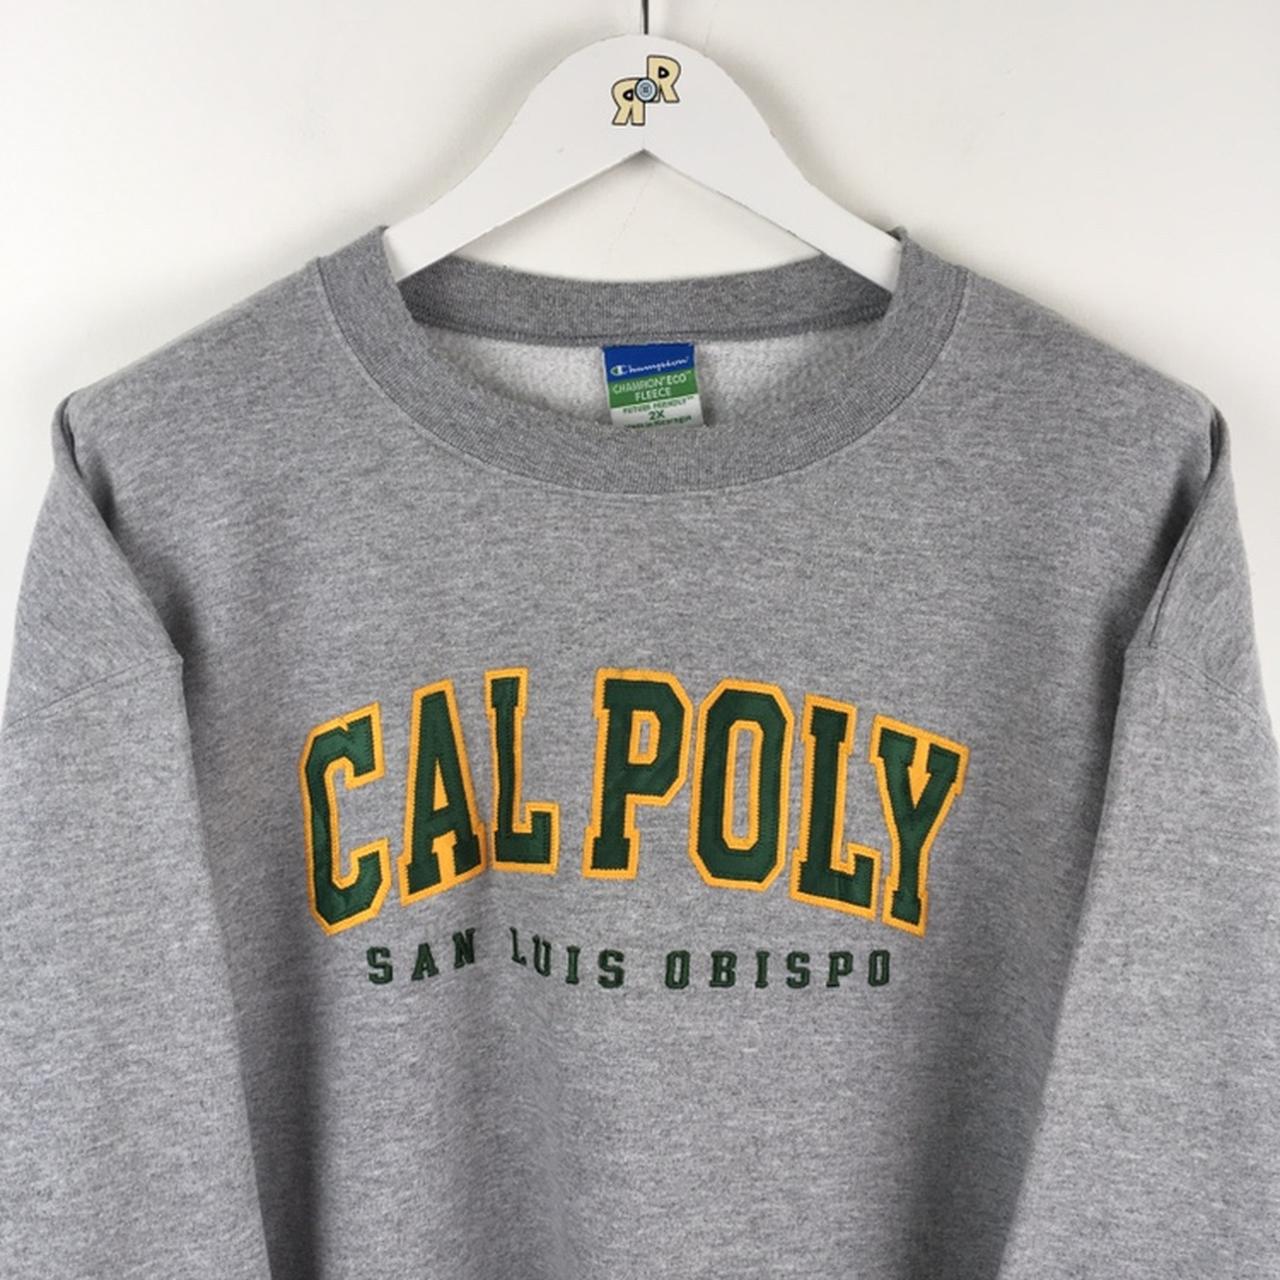 Product Image 1 - Vintage Champion Calpoly sweatshirt best